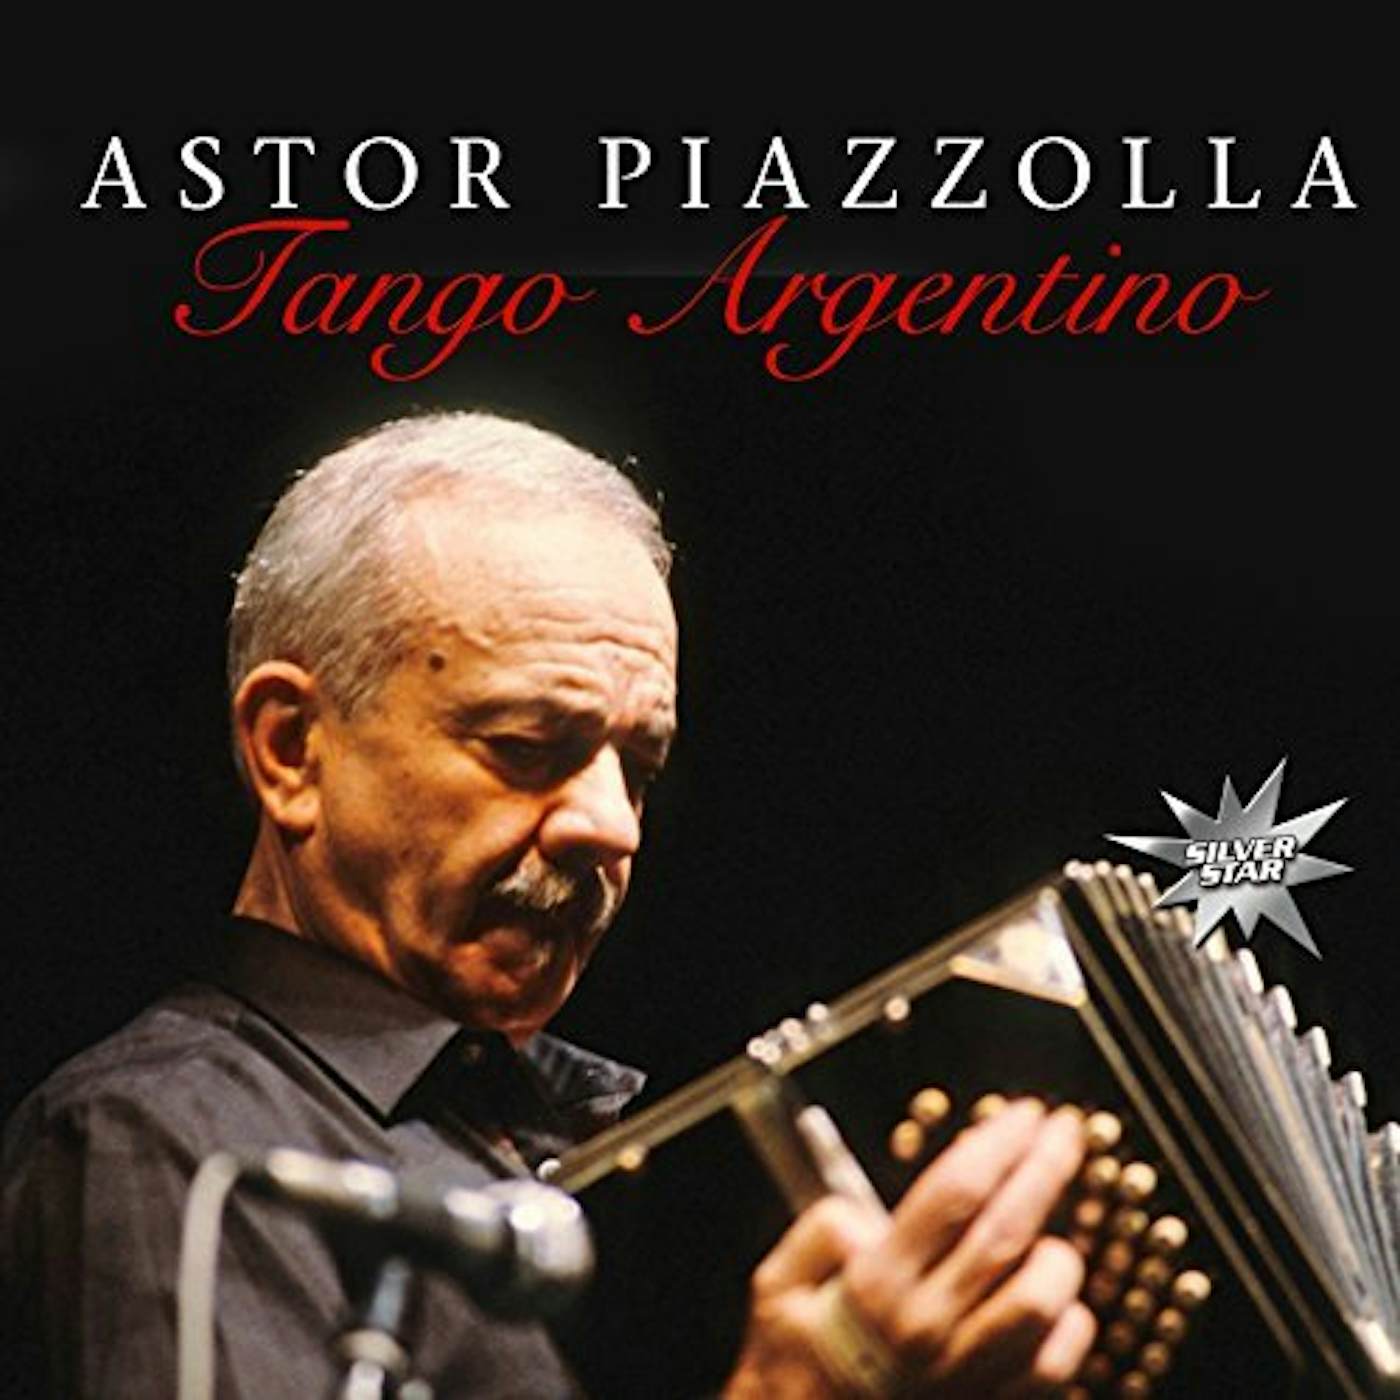 Astor Piazzolla Tango Argentino Vinyl Record